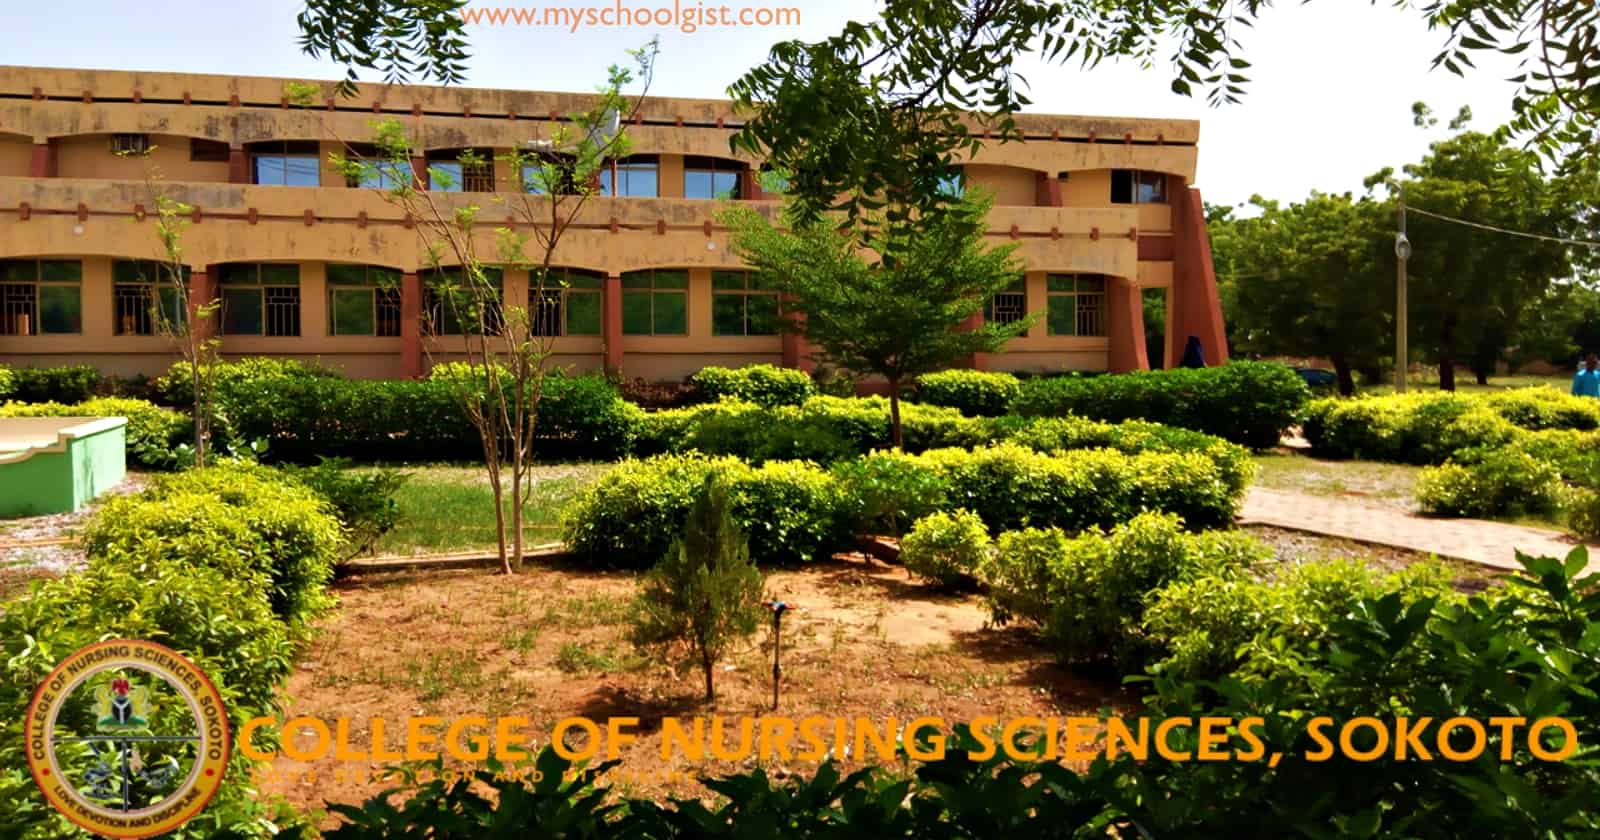 College of Nursing Sciences, Sokoto Admission List for ND/HND Programmes